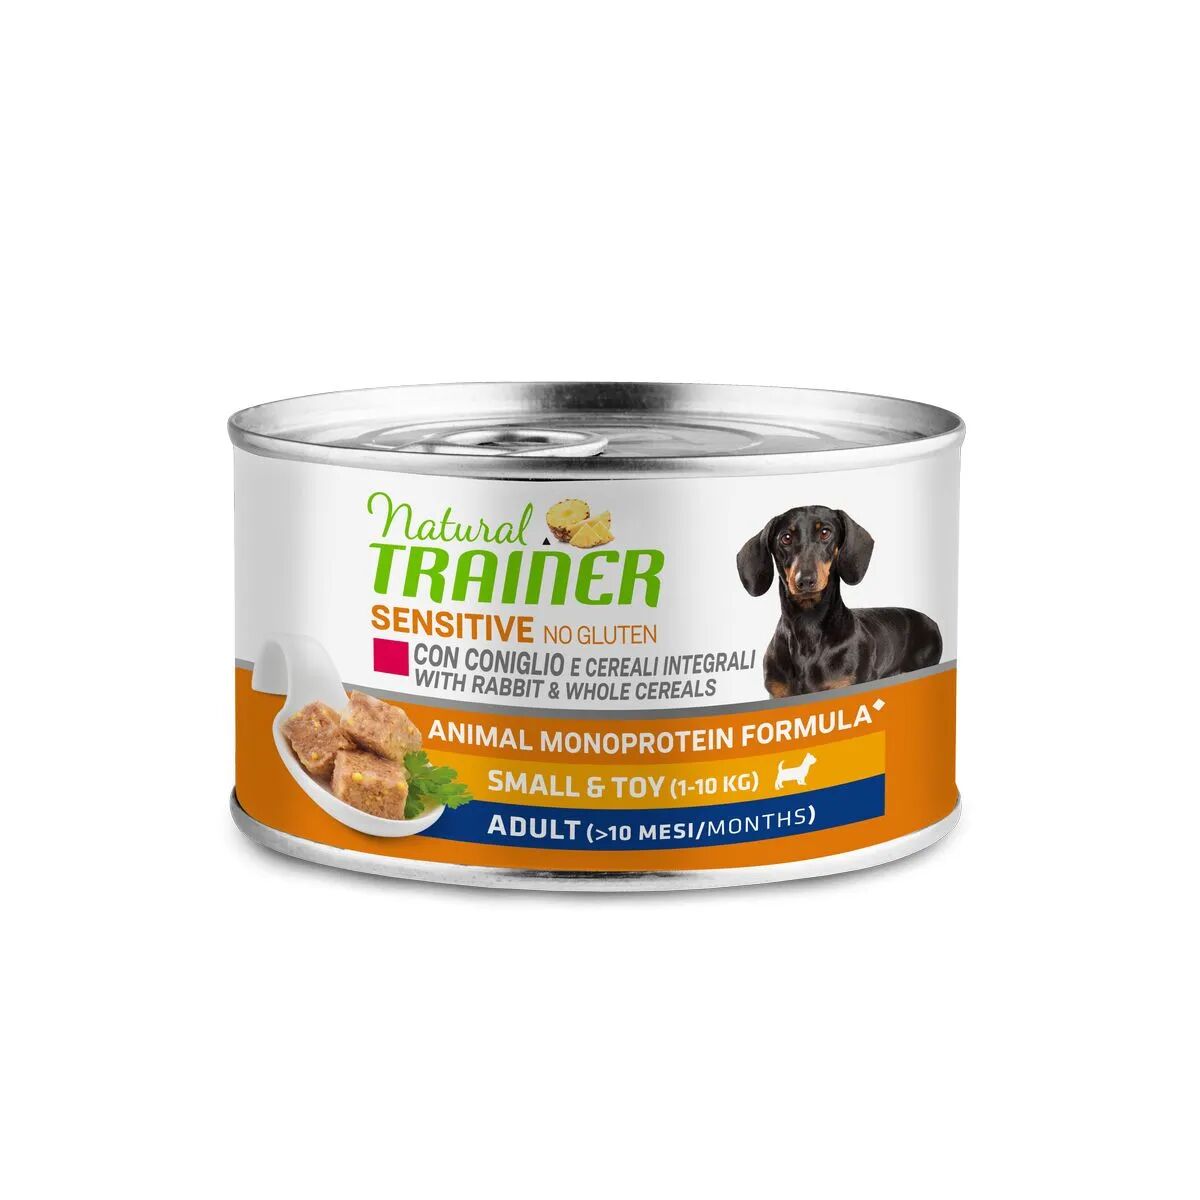 NATURAL TRAINER Sensitive No Gluten Dog Lattina Multipack 24x150G CONIGLIO